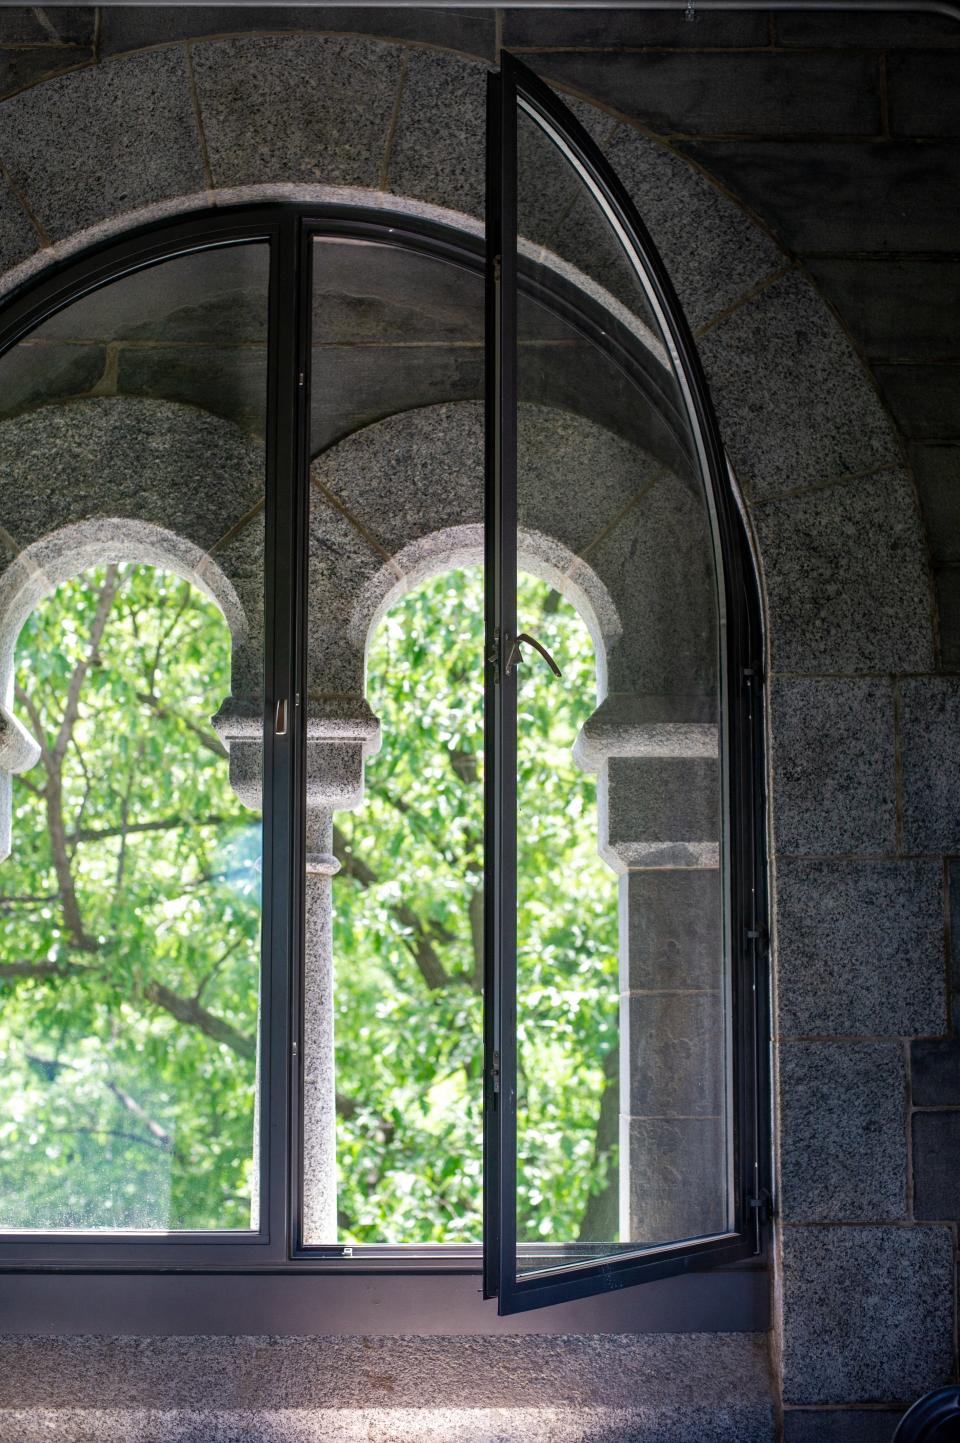 Clear glass panes honor the castle's original design.